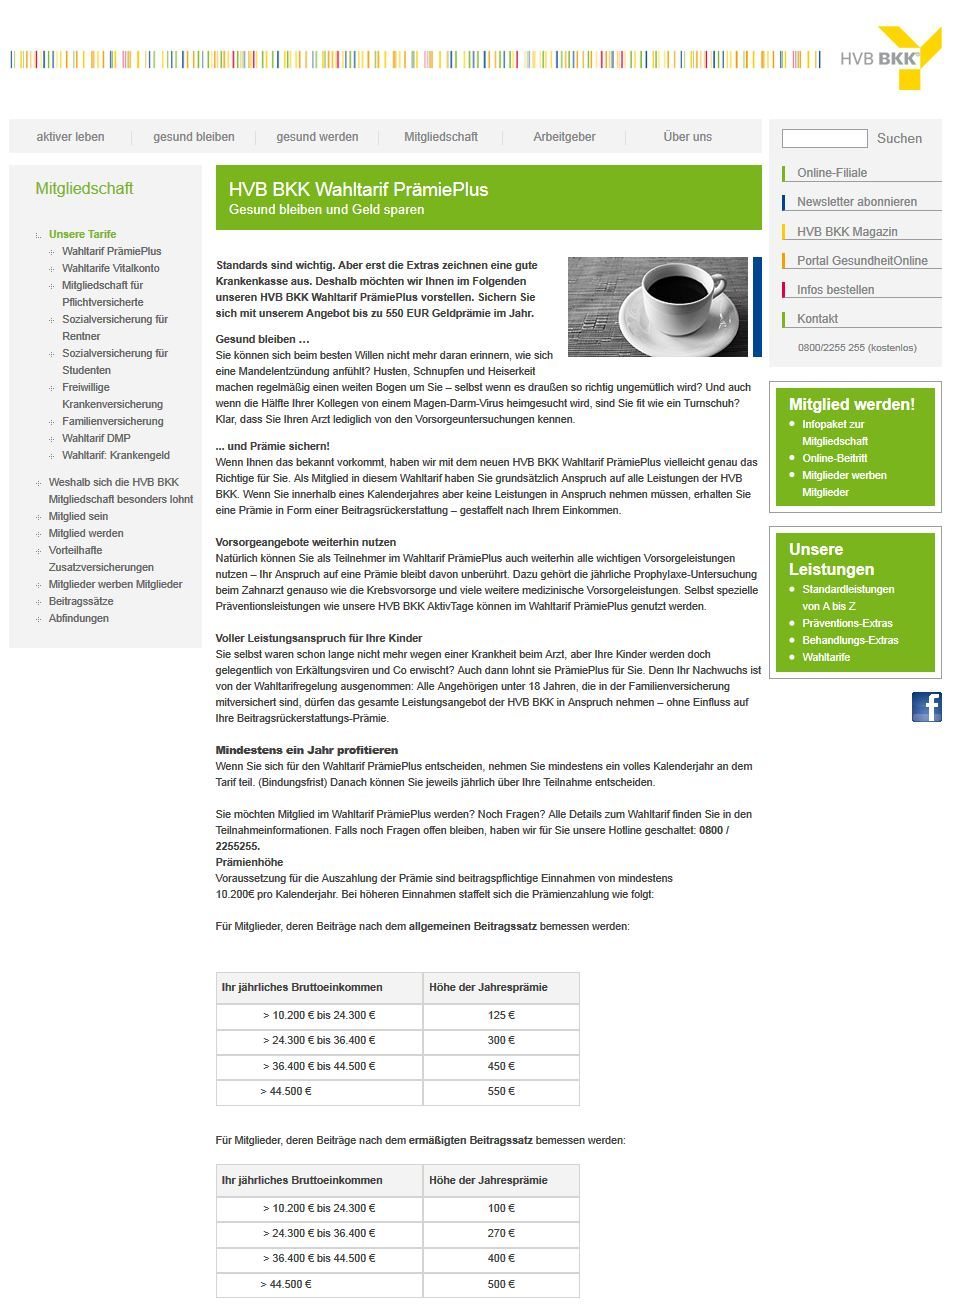 HVB BKK Prämie Plus Wahltarif (Website-Screenshot 2011/08/03)